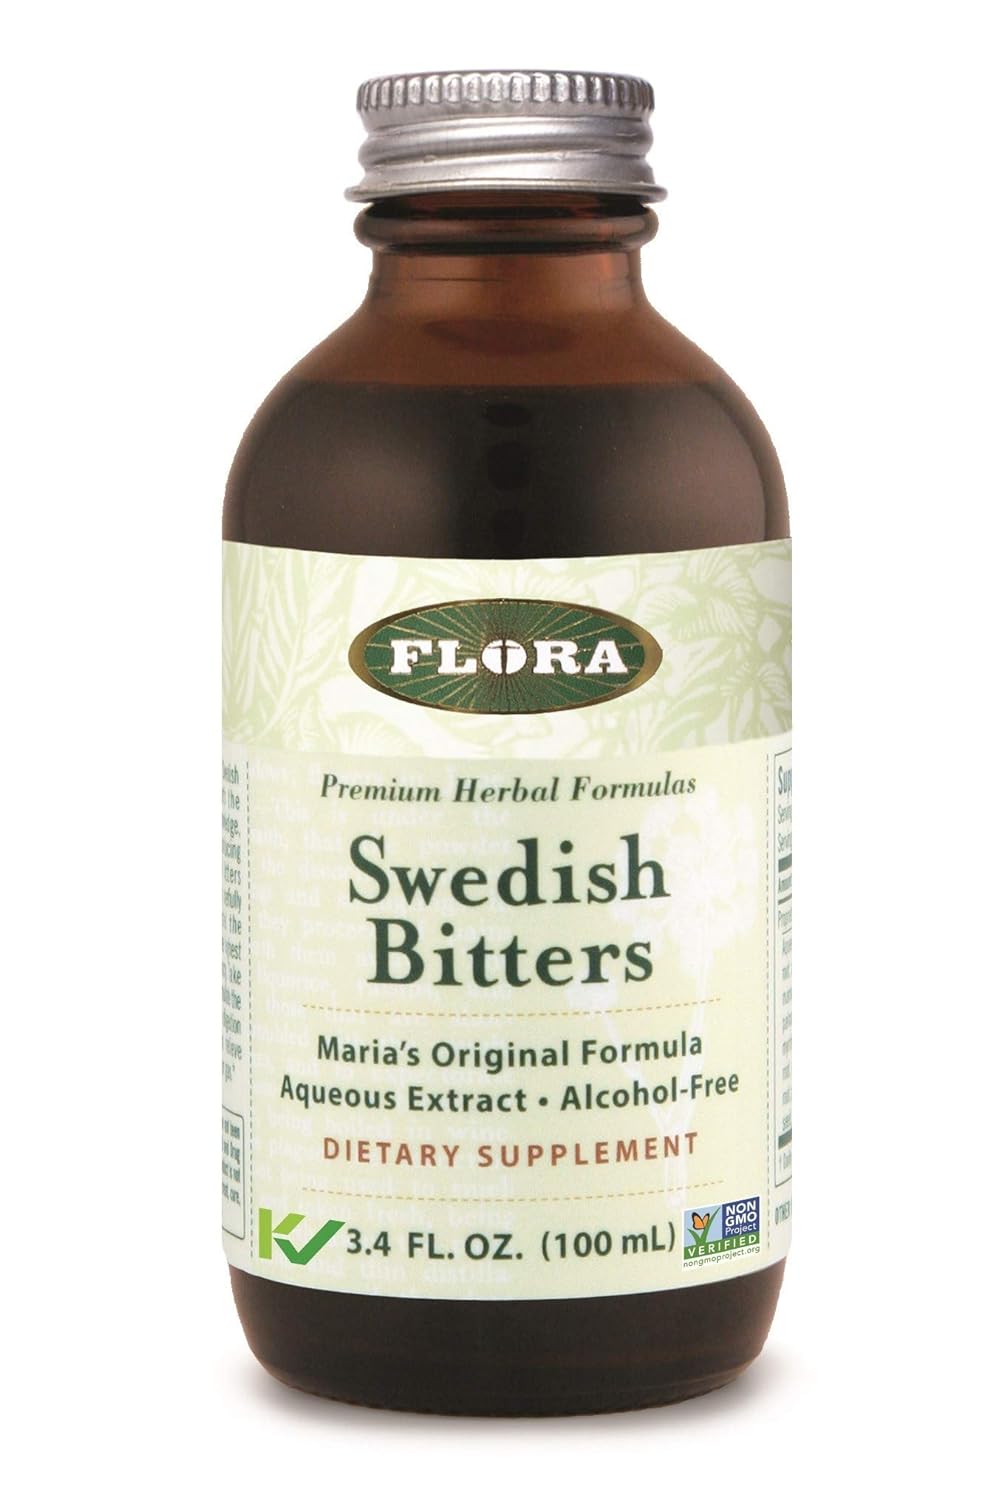 Flora - Swedish Bitters for Digestion, Alcohol-Free Bitters Help Bloating & Digestion, Maria's Original Formula Aqueous Extract, Vegan, Kosher, Non GMO, 3.4-fl. oz. Glass Bottle